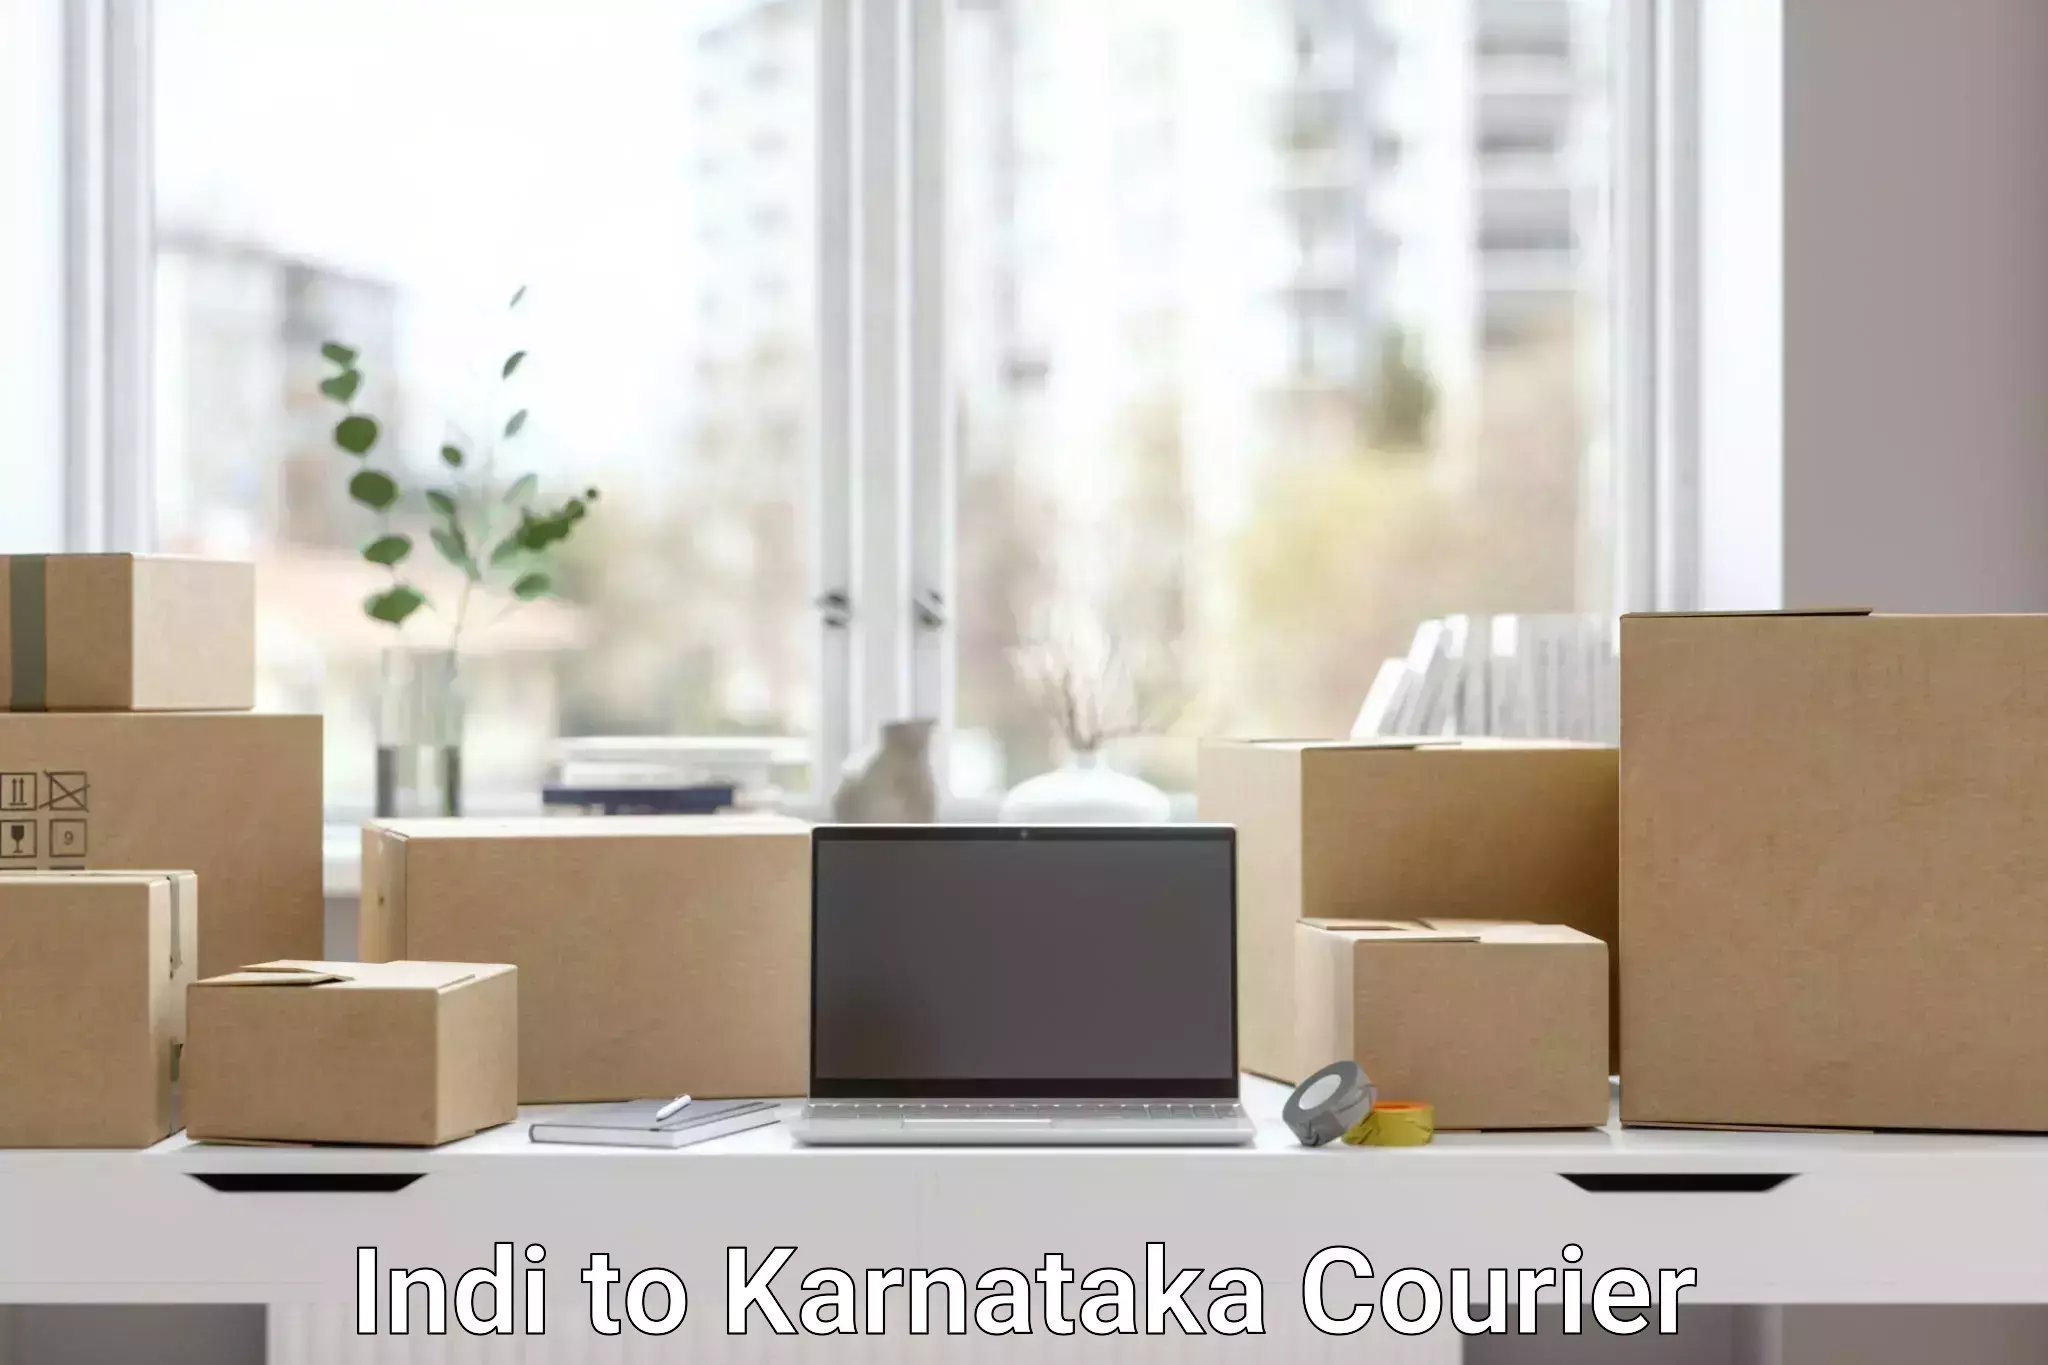 Courier service booking Indi to Karnataka